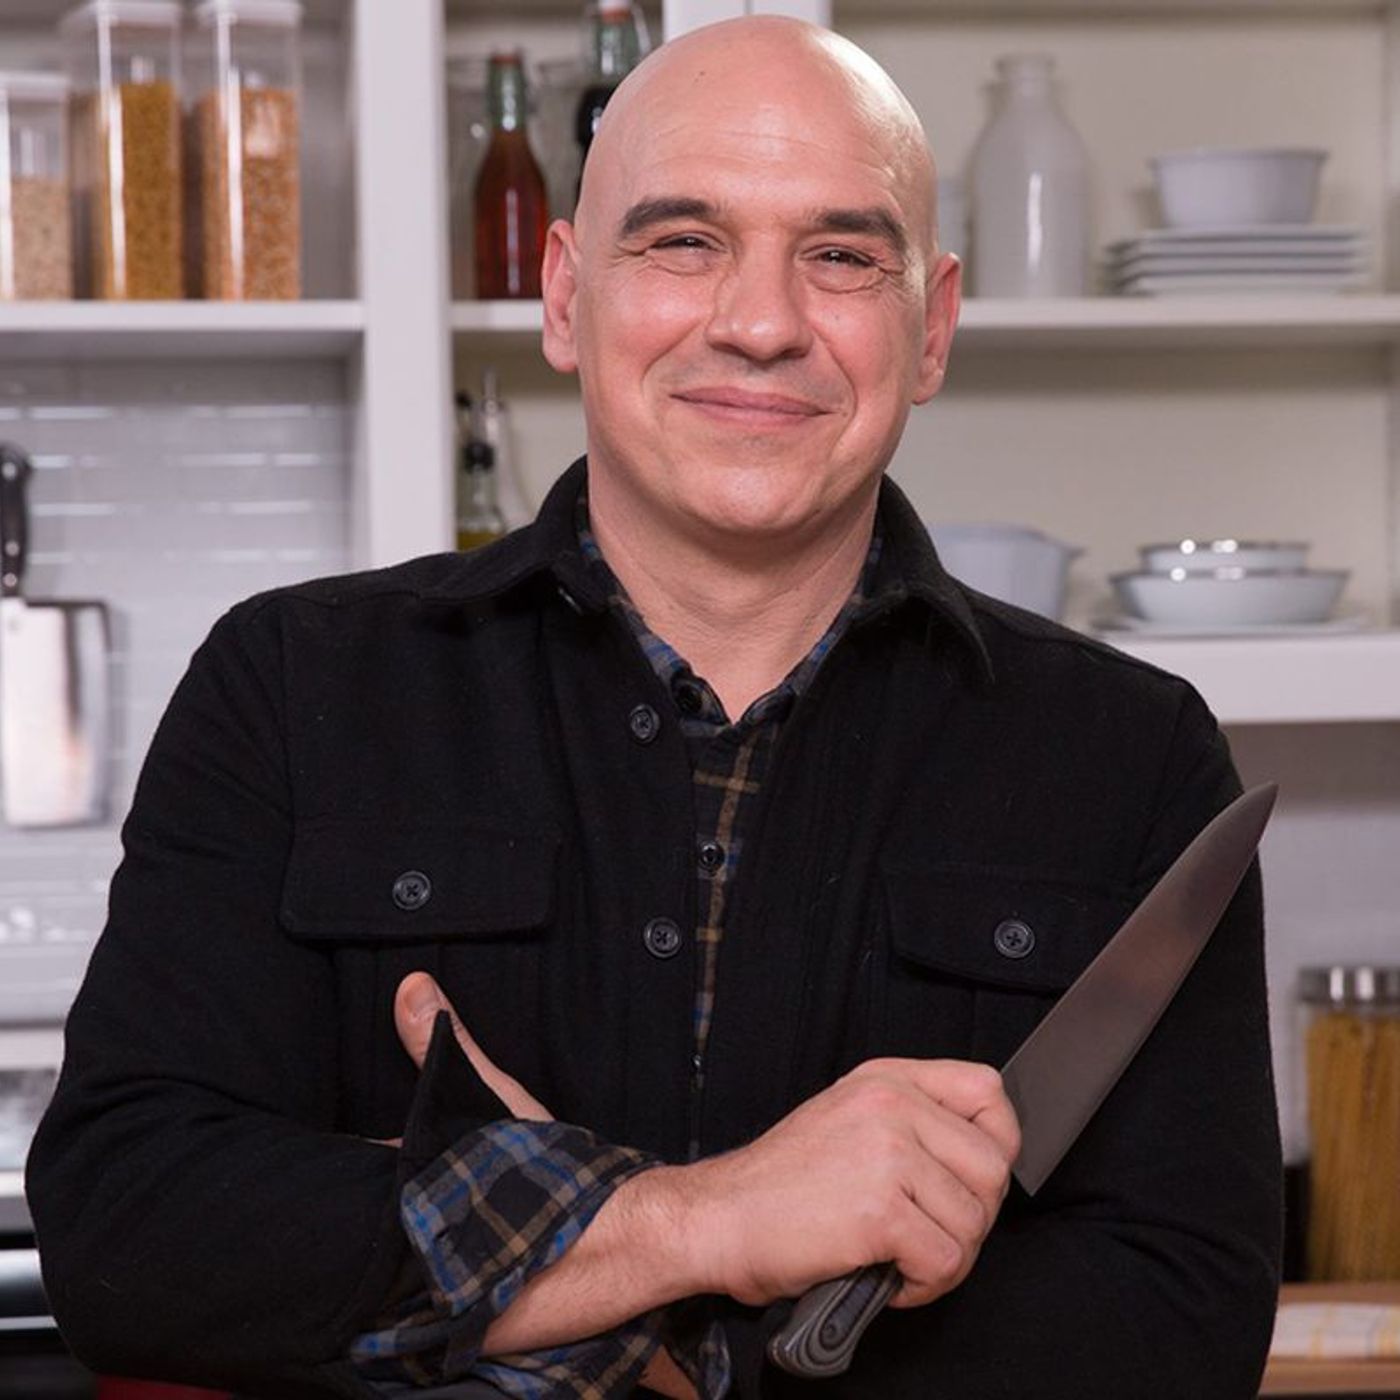 Chef Michael Symon - ”Iron Chef,” ”BBQ USA,” ”The Chew”